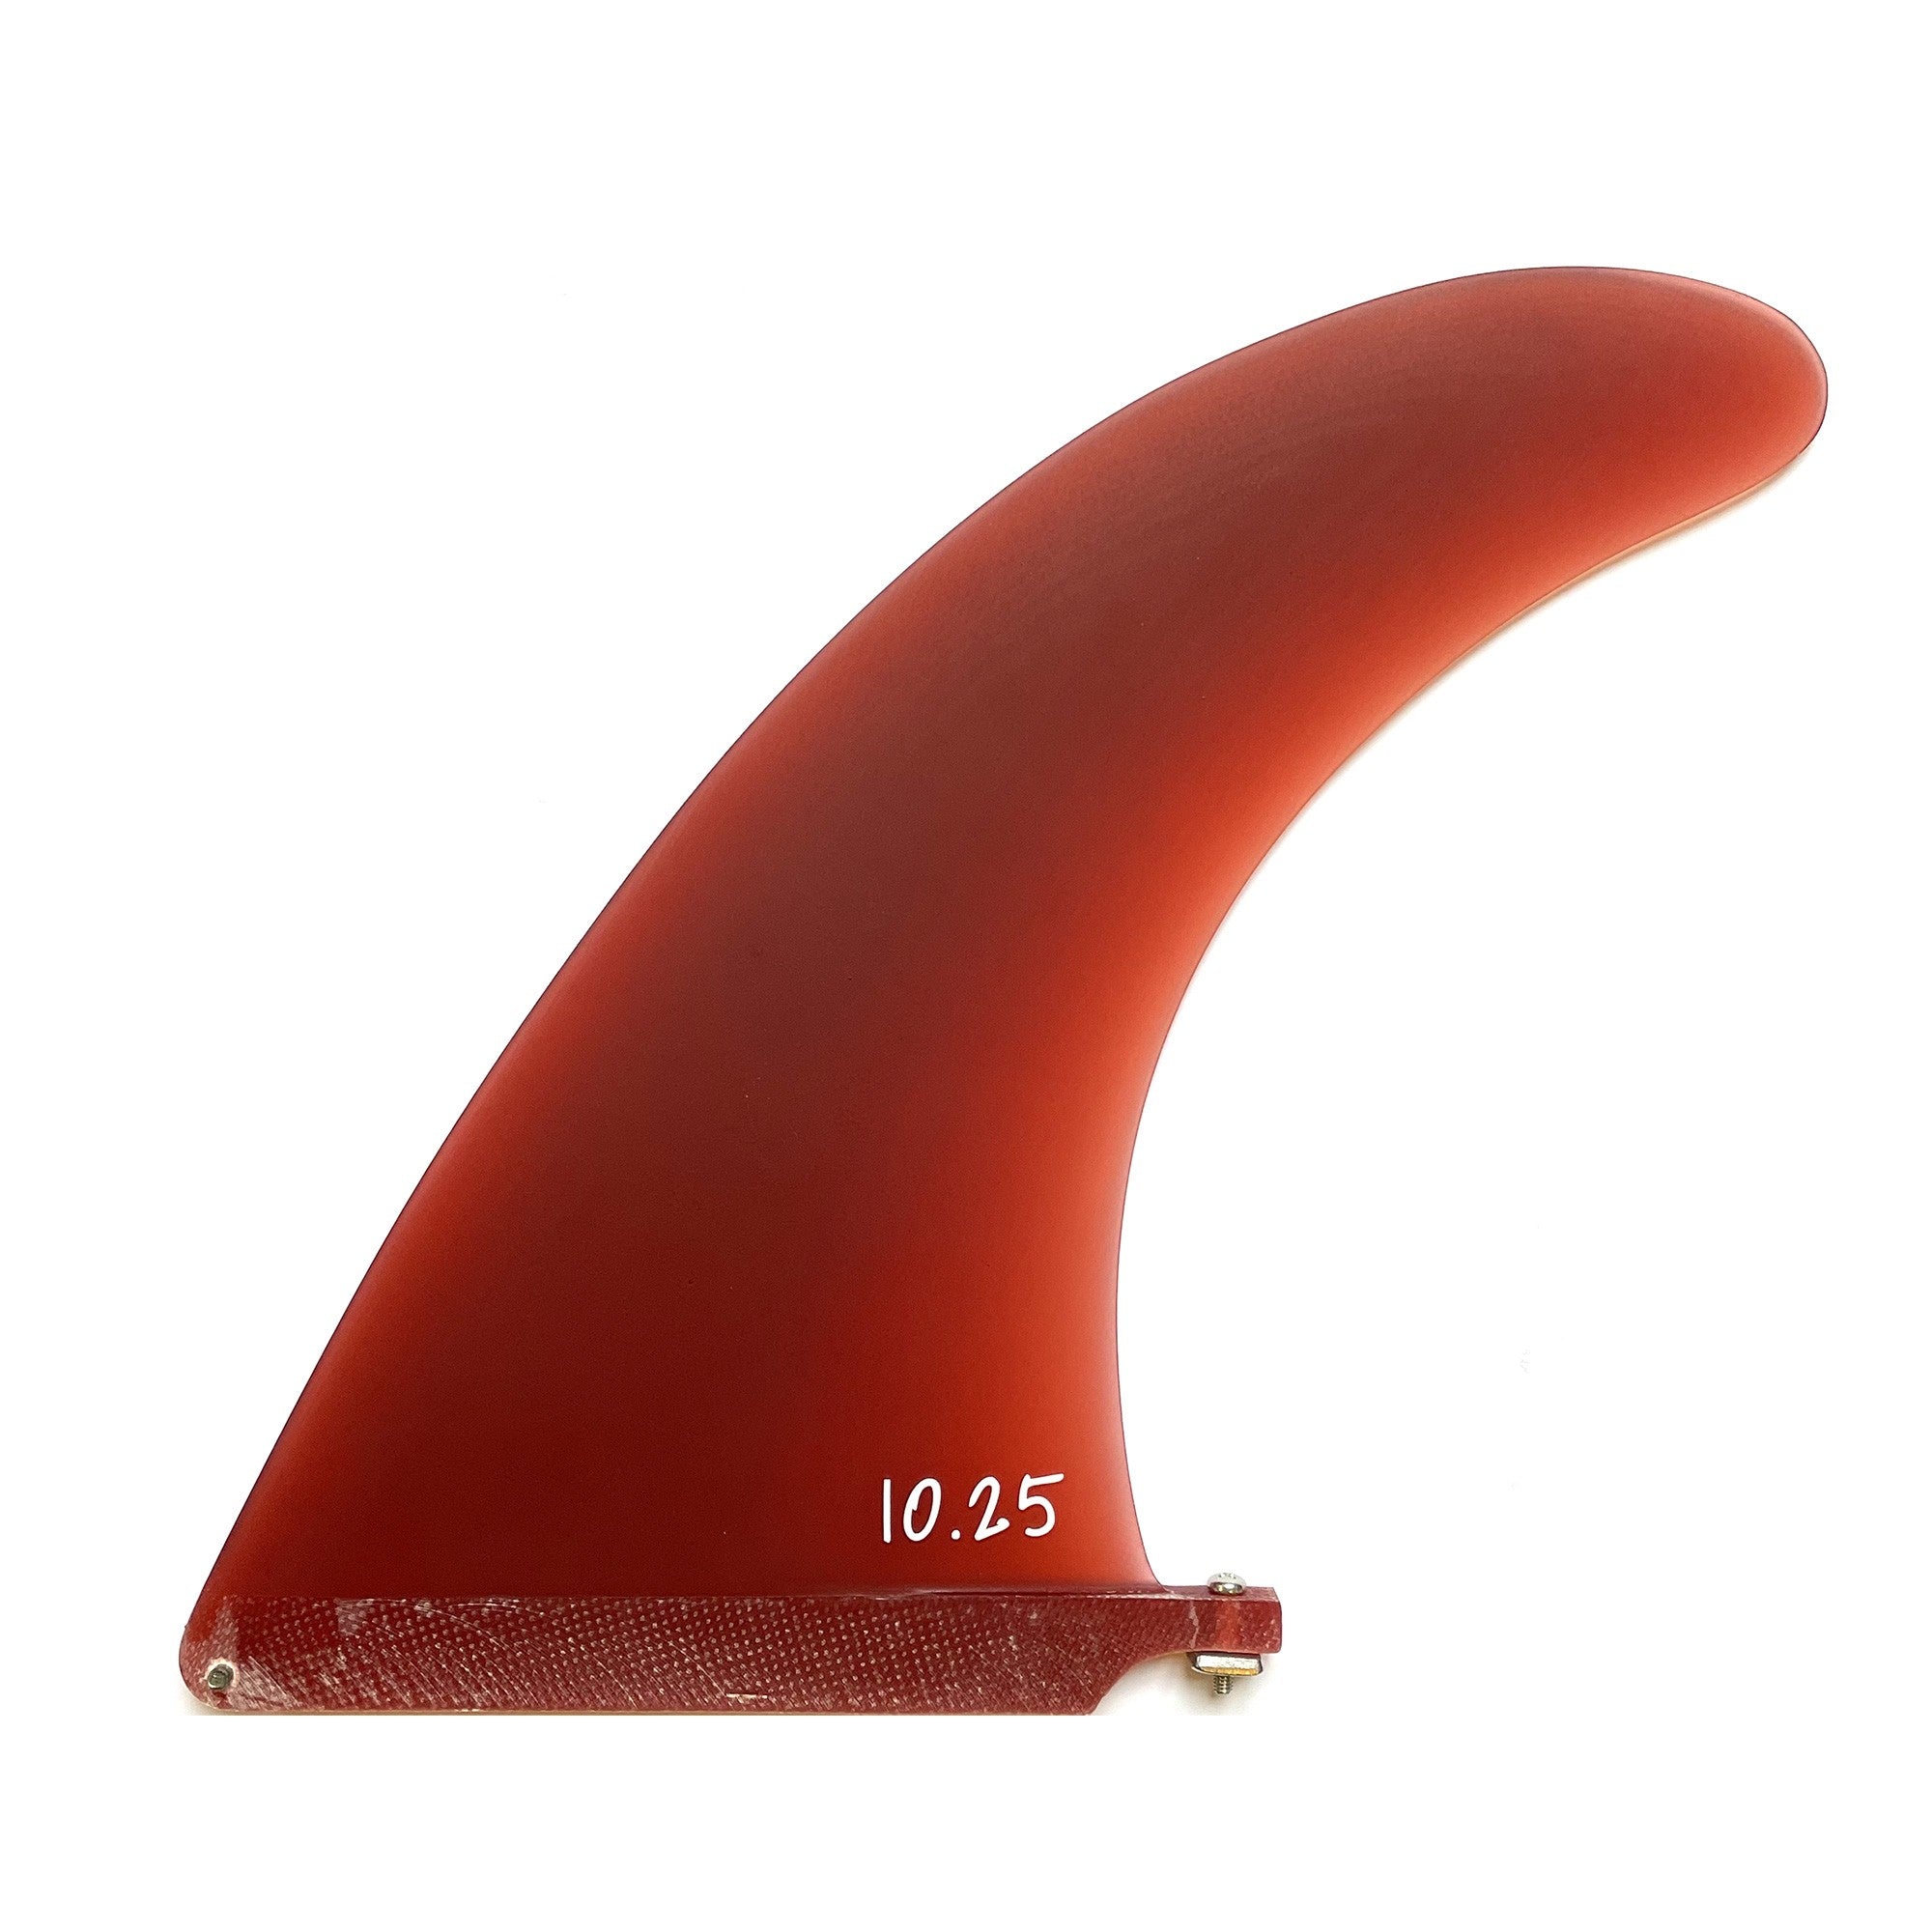 SISTEMA DE SURF - Aleta única clásica de fibra de vidrio (caja de EE. UU.) - Rojo